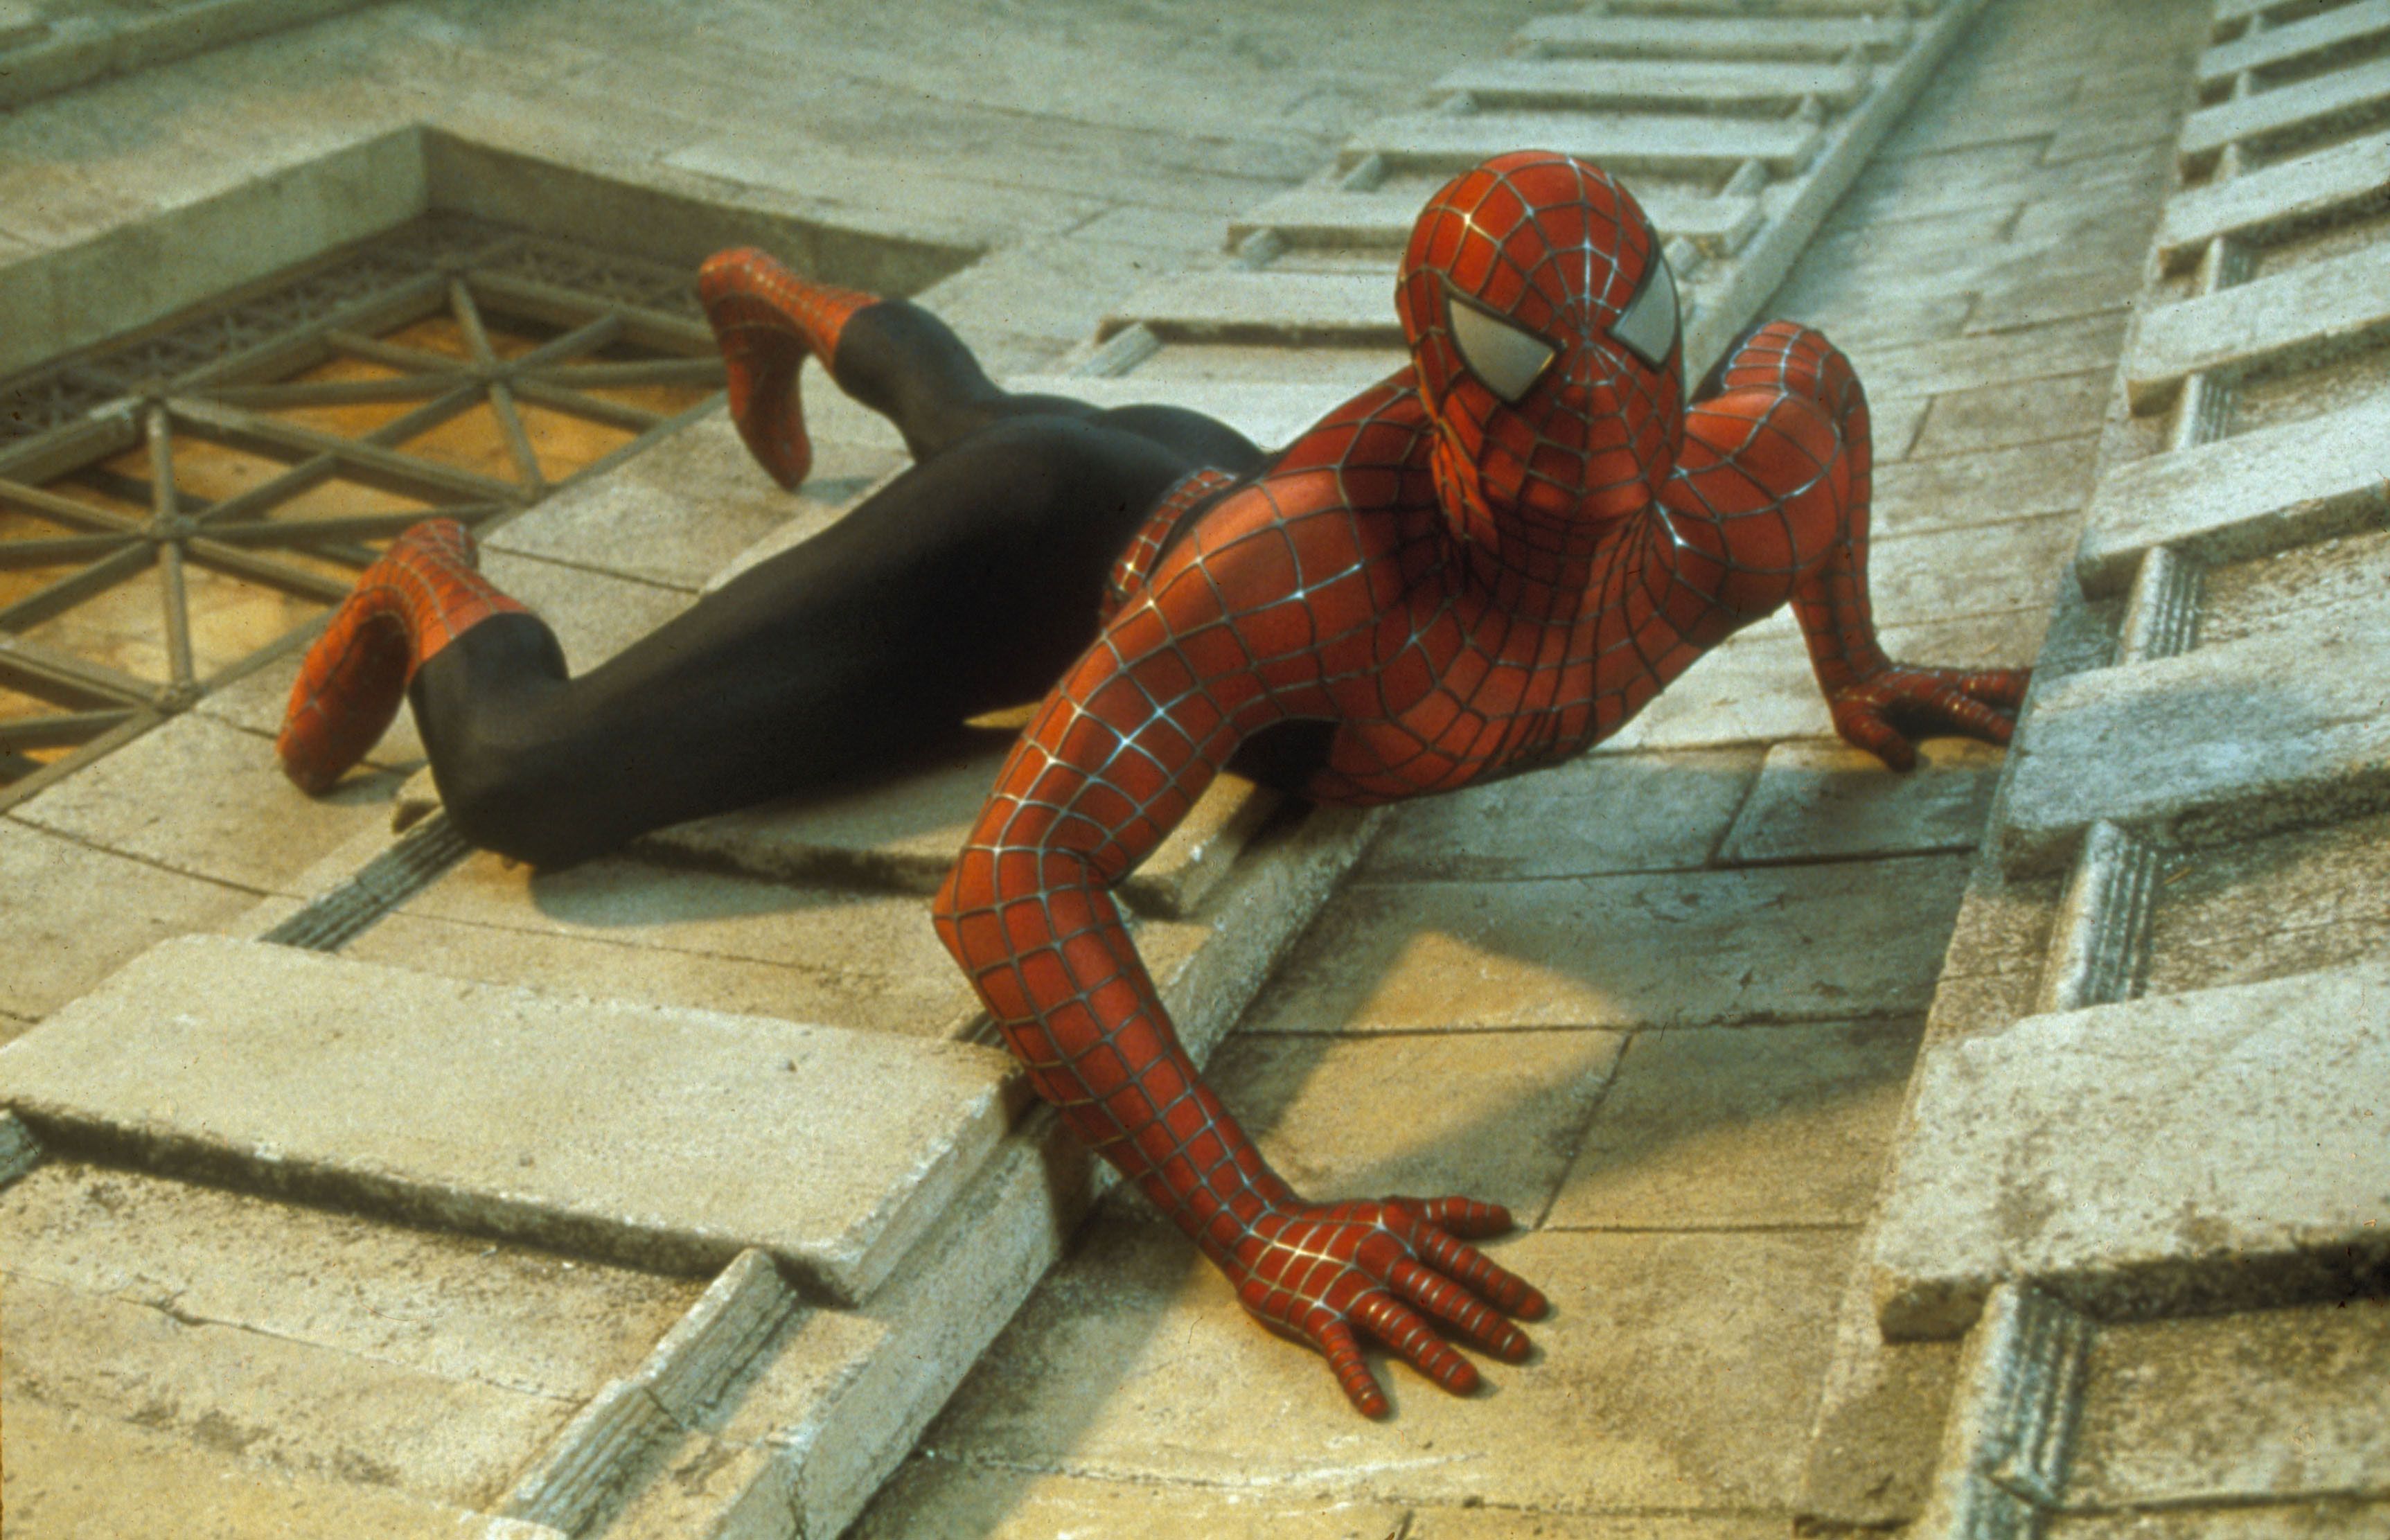 The Studio Demands It! The Amazing Spider-Man 3 (Podcast Episode